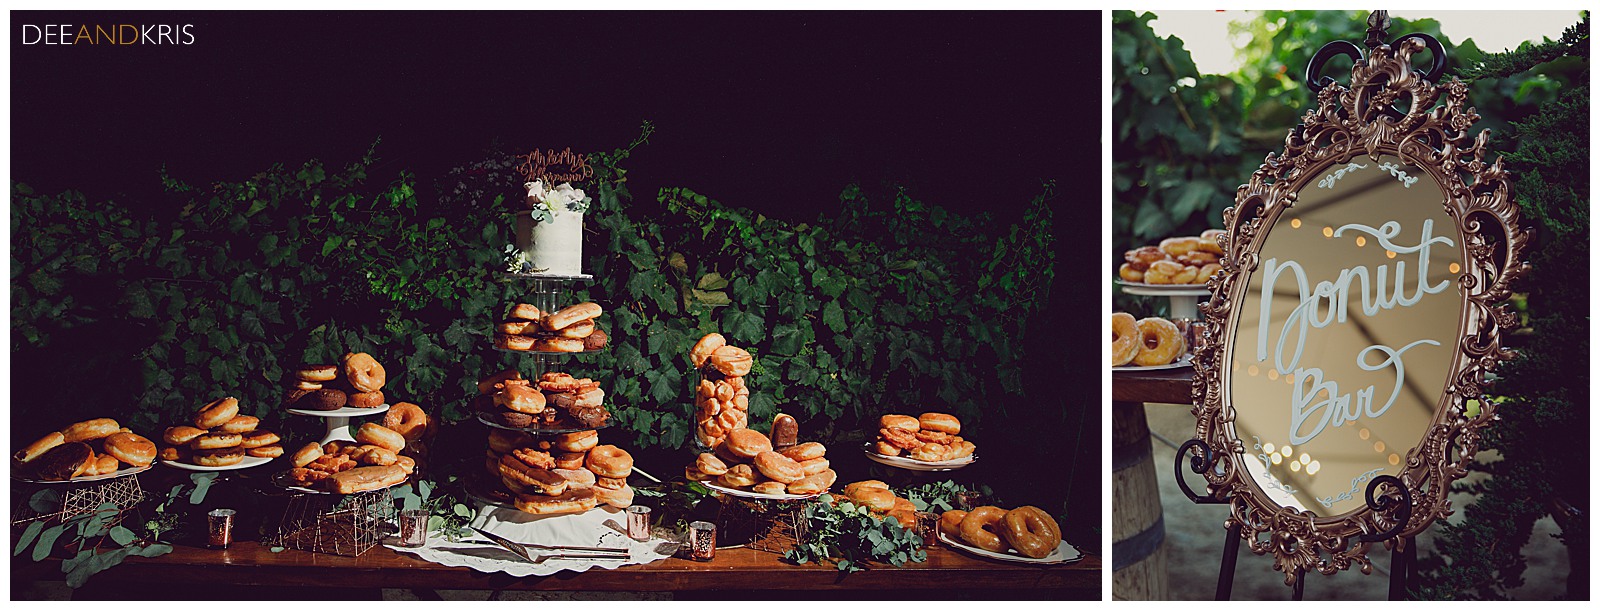 Wedding donut bar with small cake, wedding mirror sign 